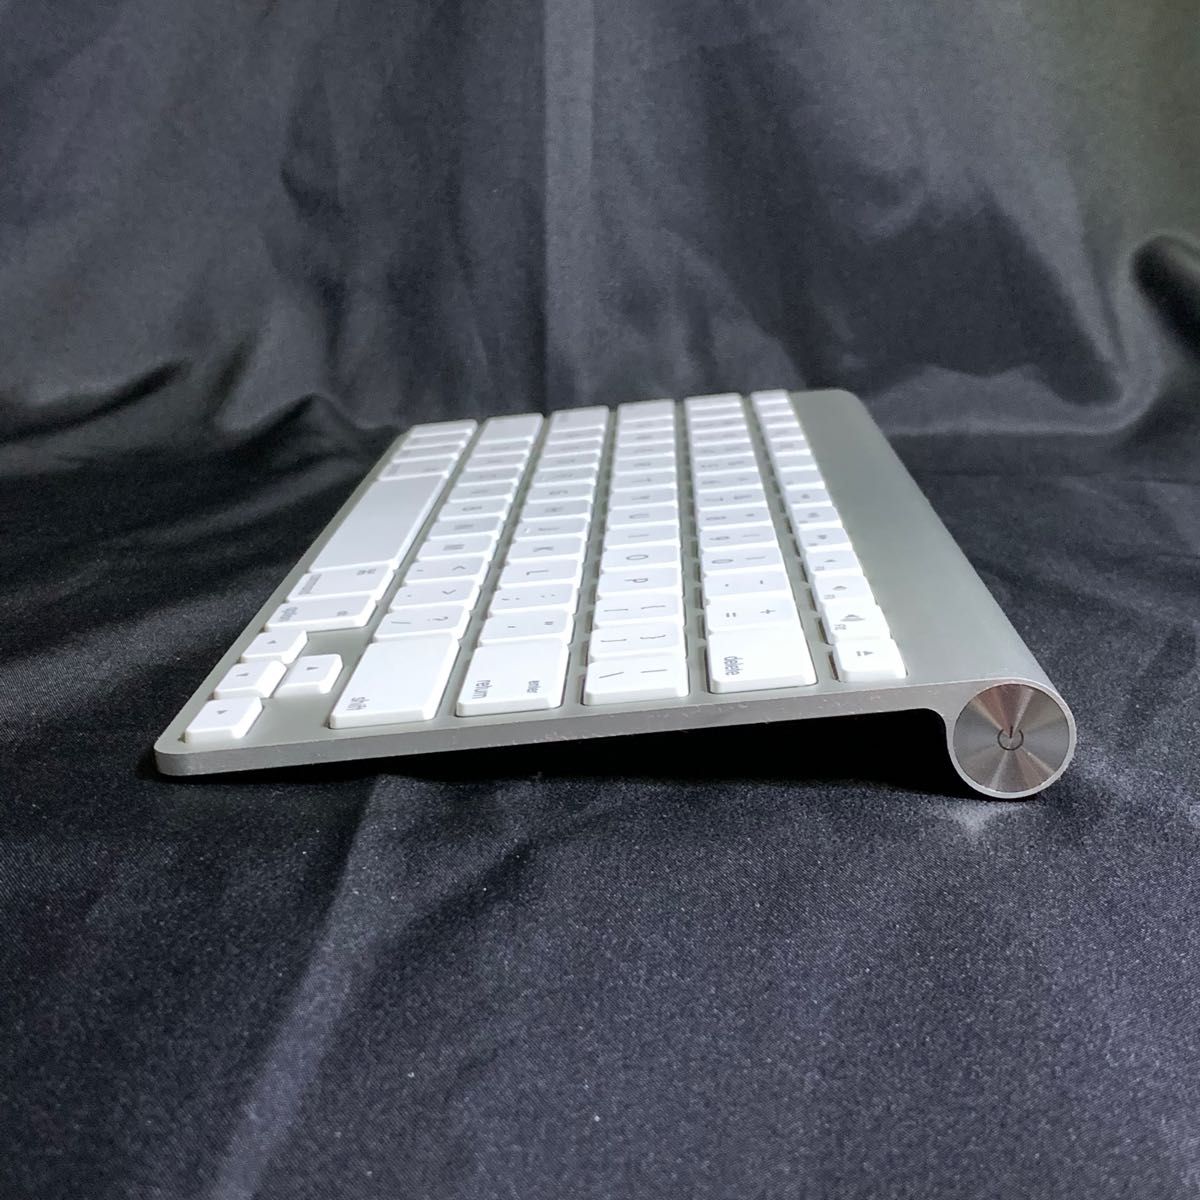 Apple ワイヤレス キーボード US表記 美品 アップル iMac 純正品  Keyboard  Bluetooth